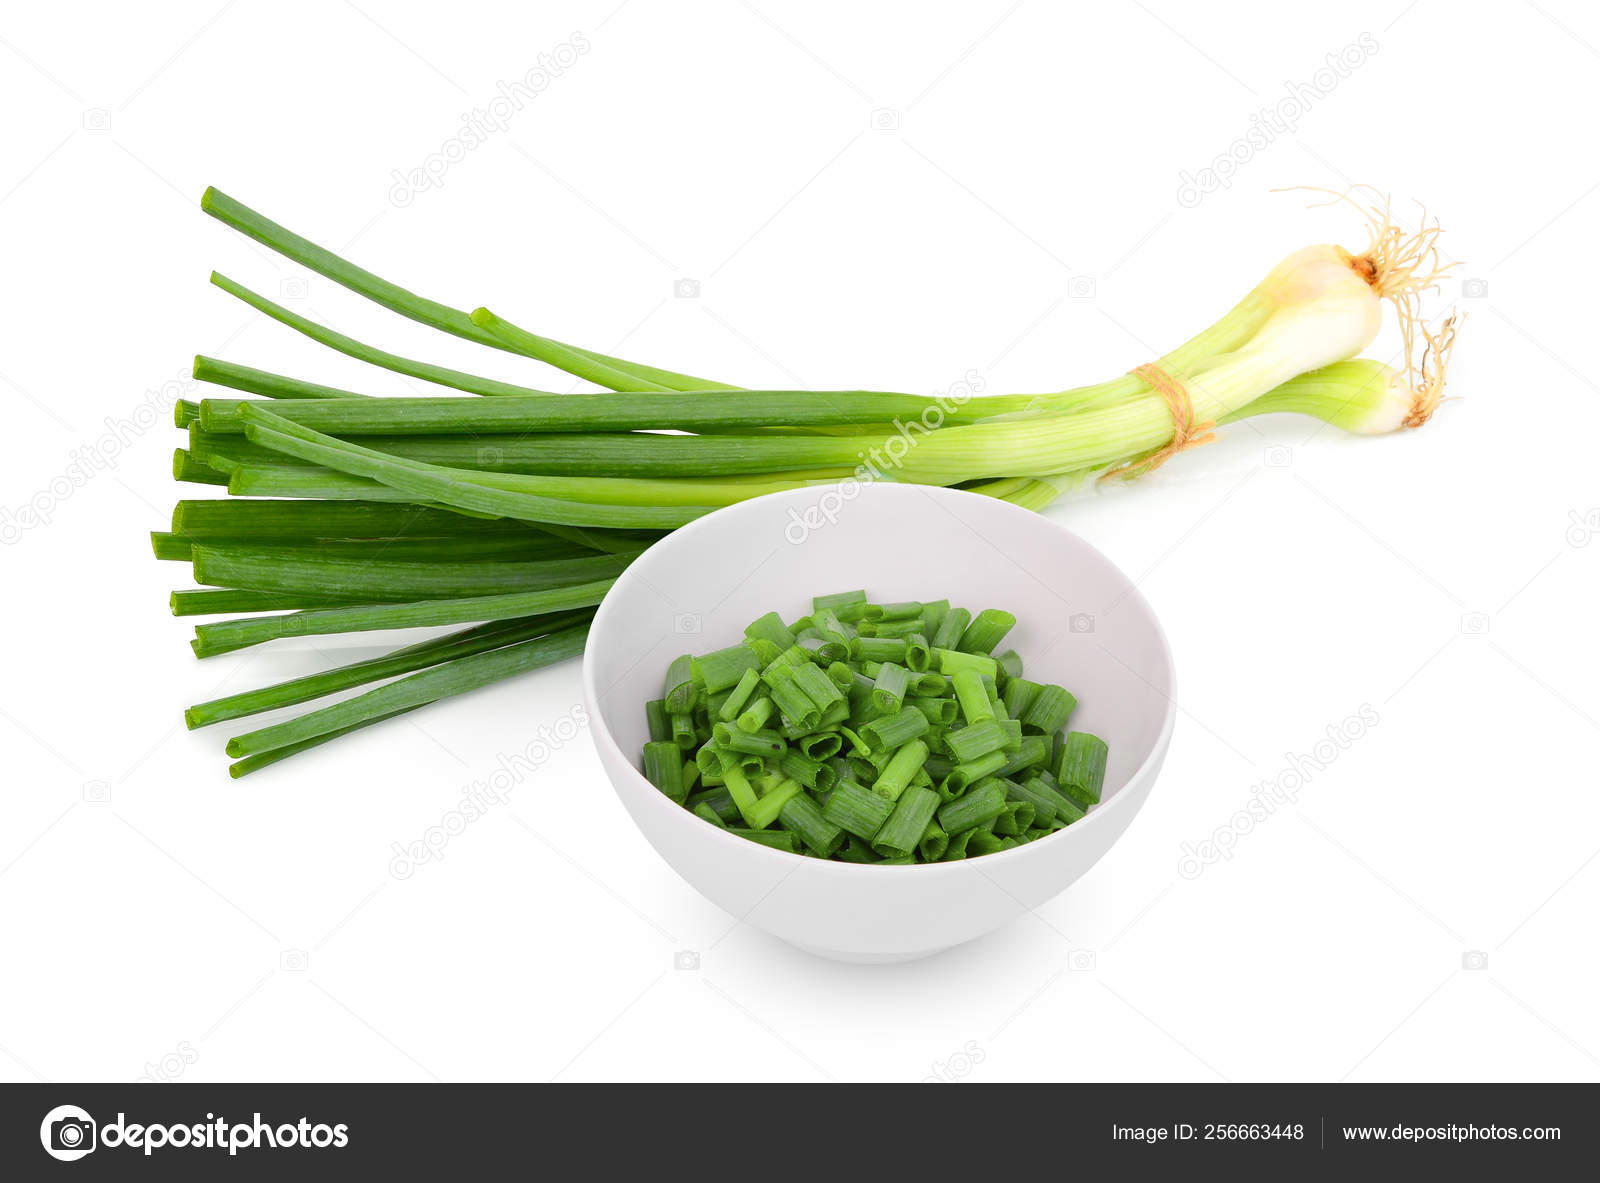 https://st4.depositphotos.com/10232124/25666/i/1600/depositphotos_256663448-stock-photo-chopped-green-onion-in-the.jpg